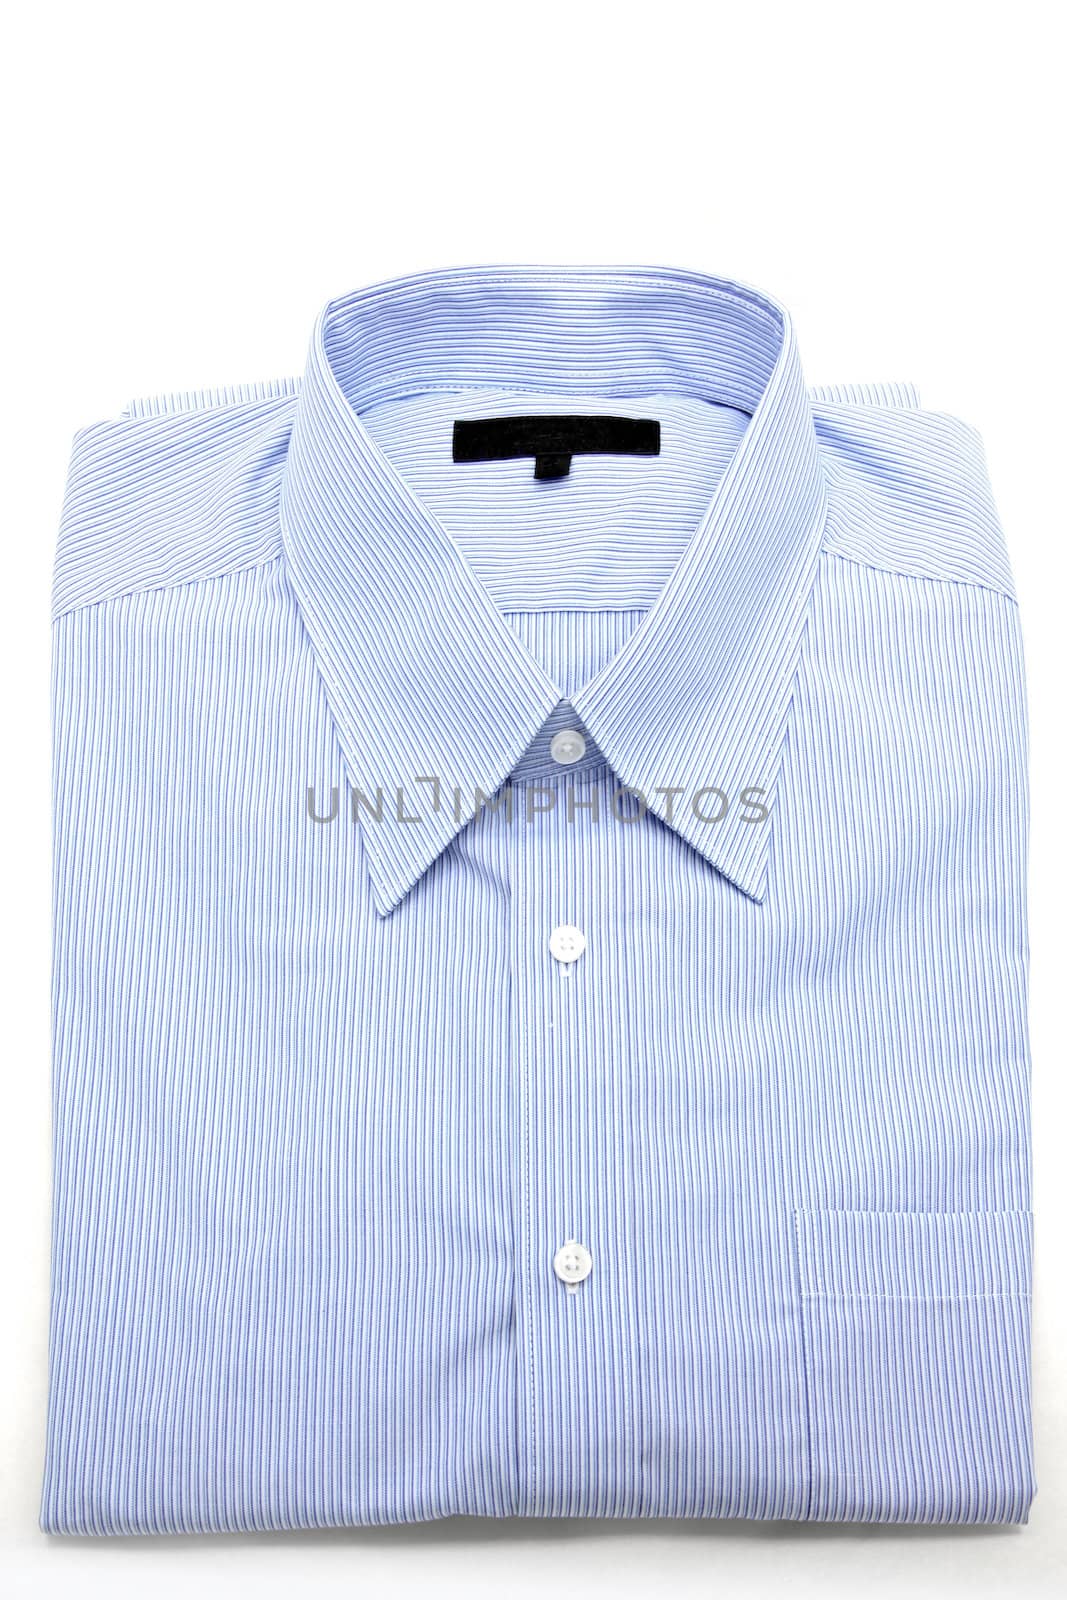 Blue business shirt on white background